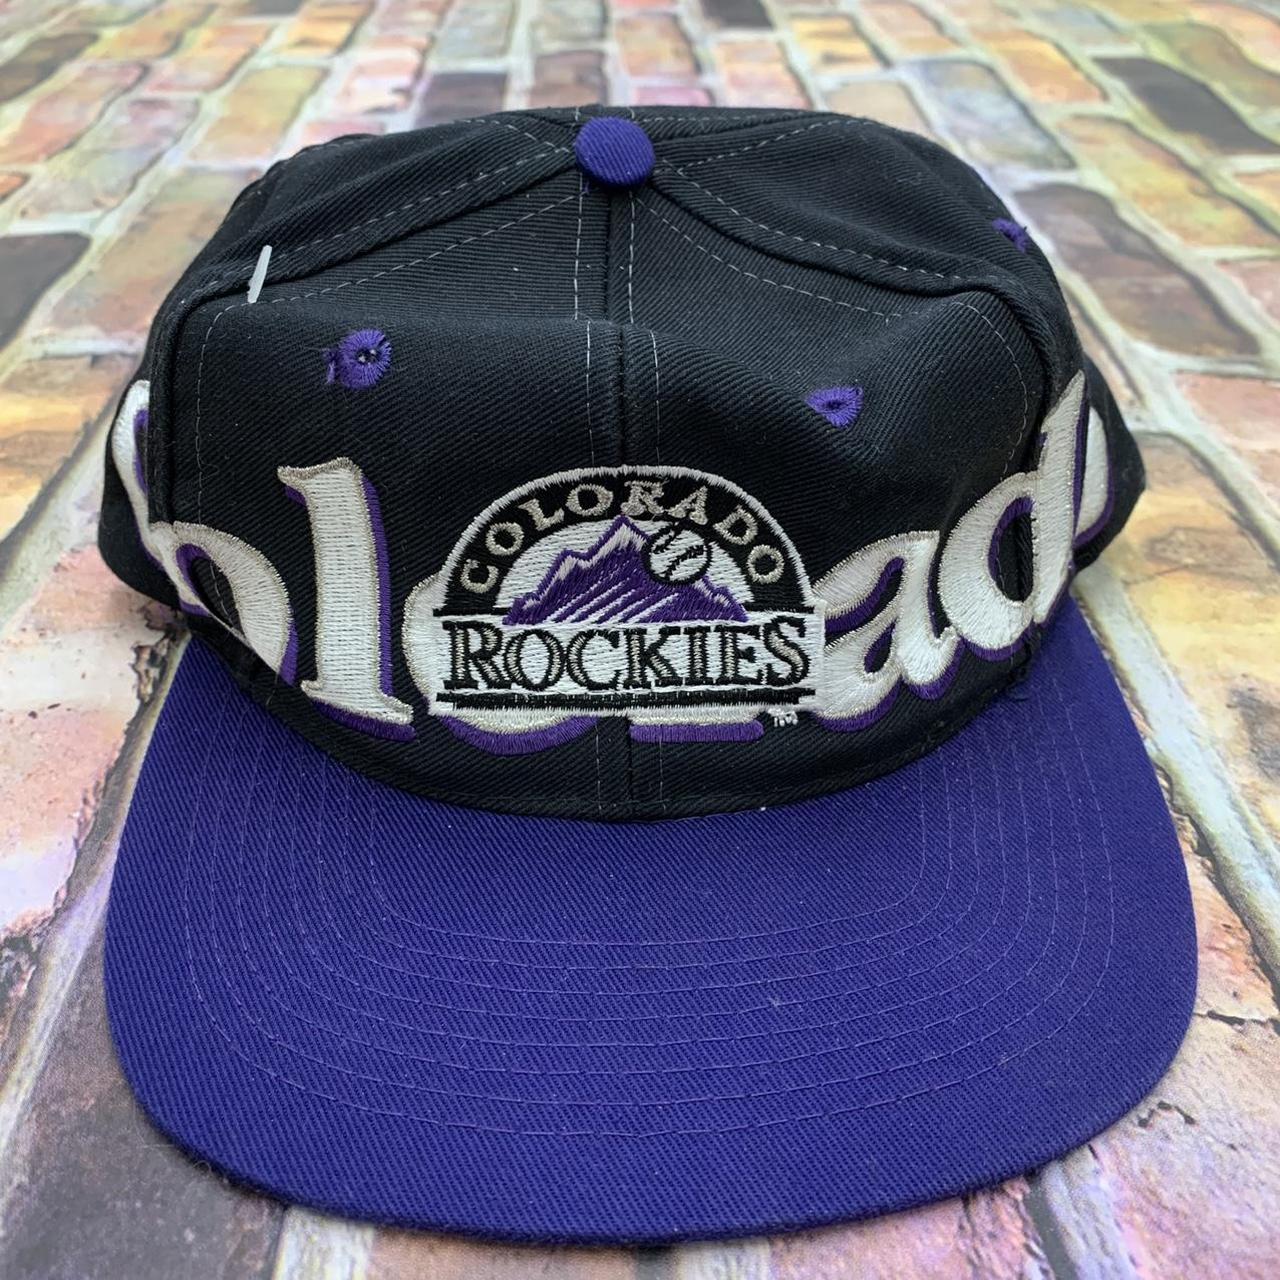 Vintage Colorado Rockies snapback hat in purple.